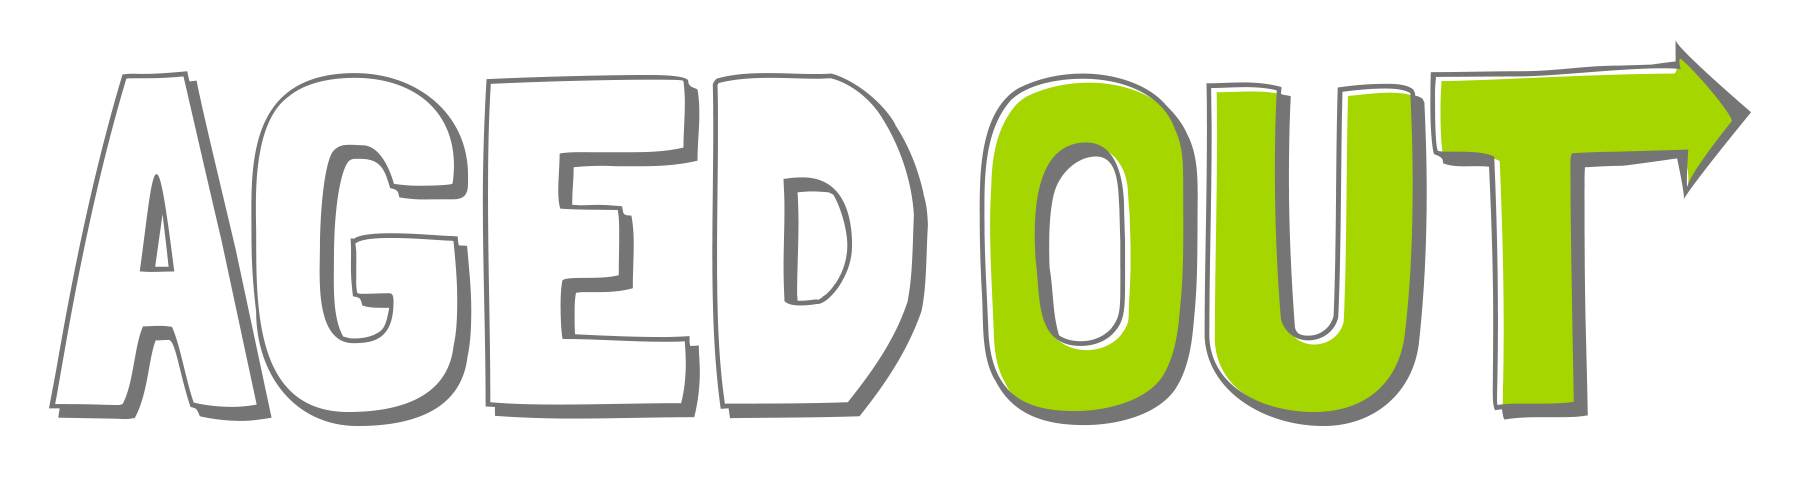 AgedOut.com logo on purple background